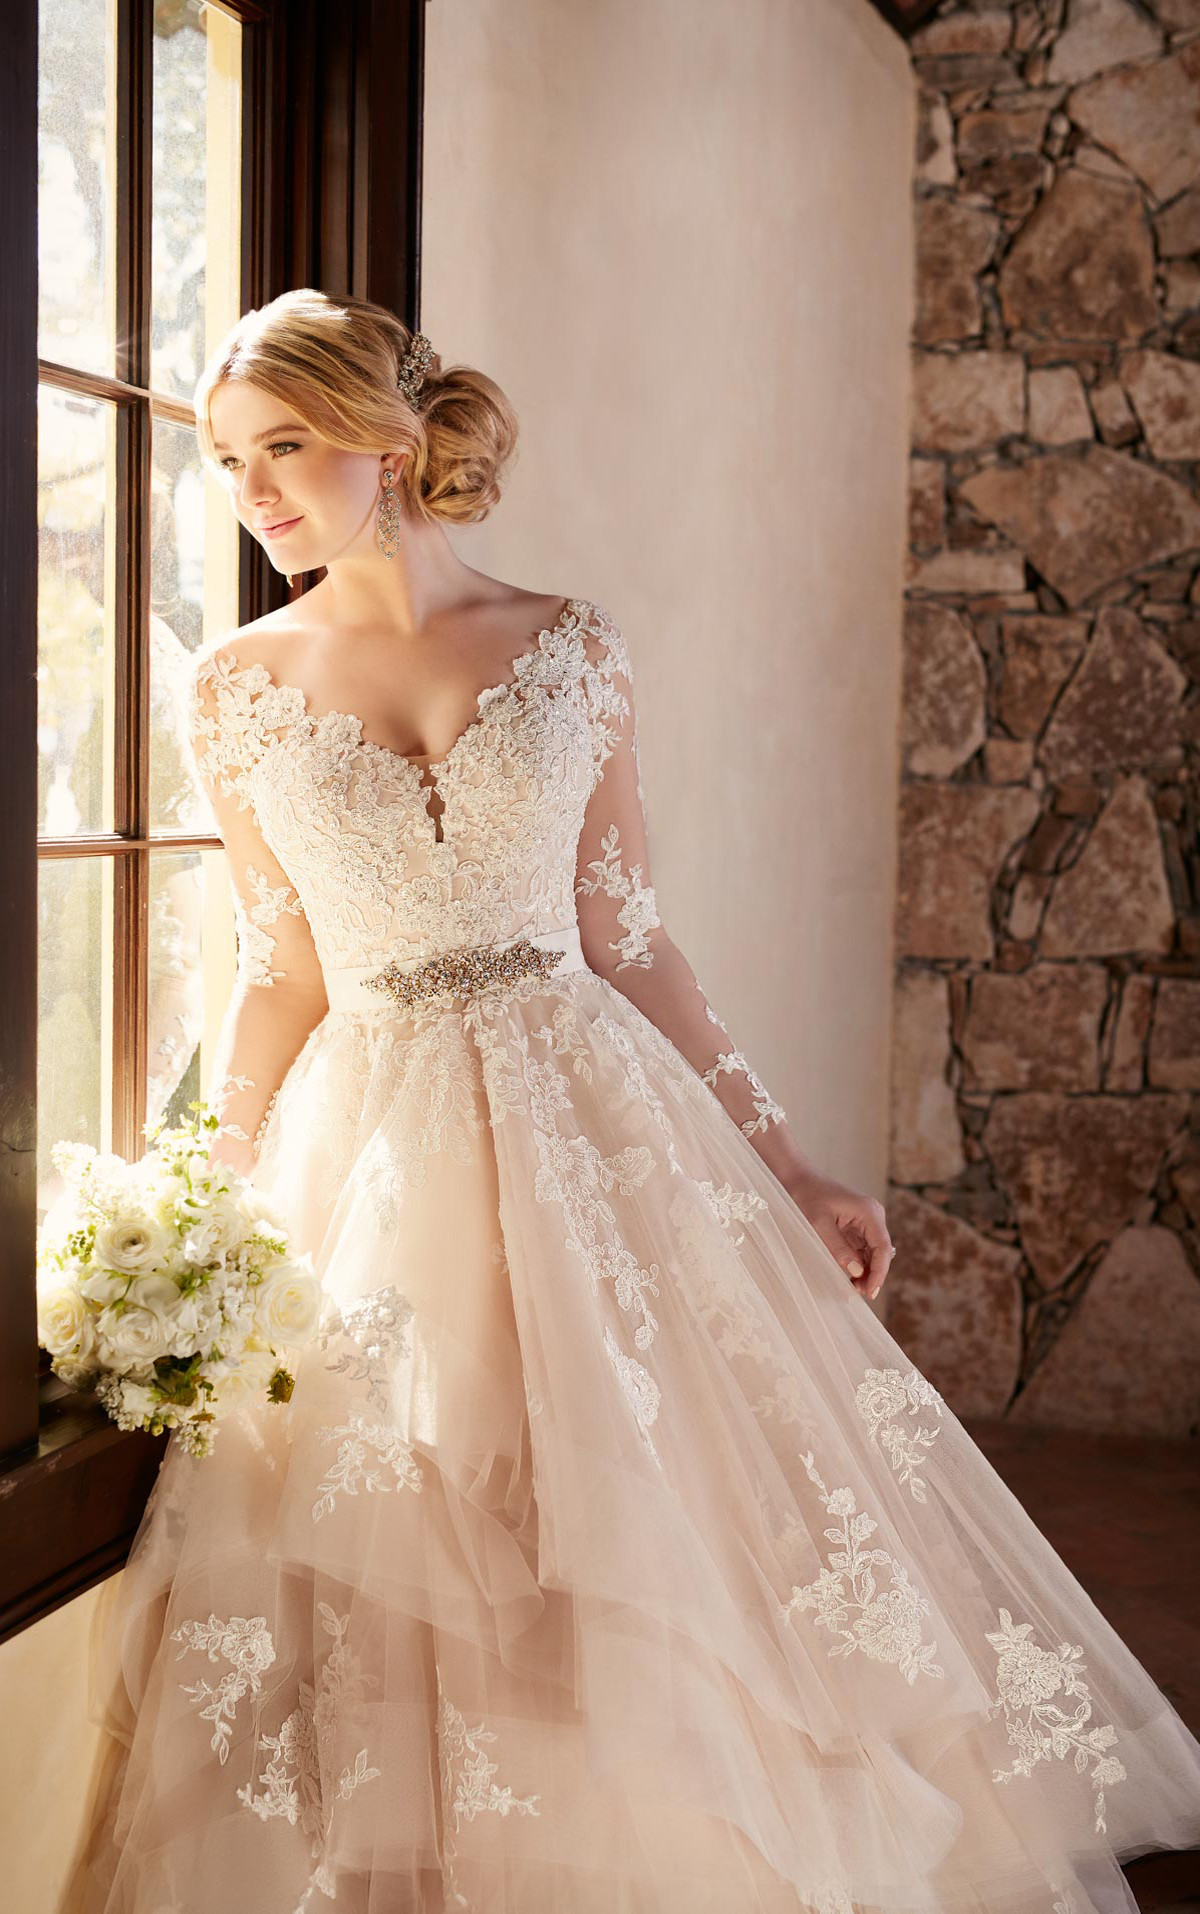 Lace Sleeve Wedding Dress
 Sleeved Wedding Dresses